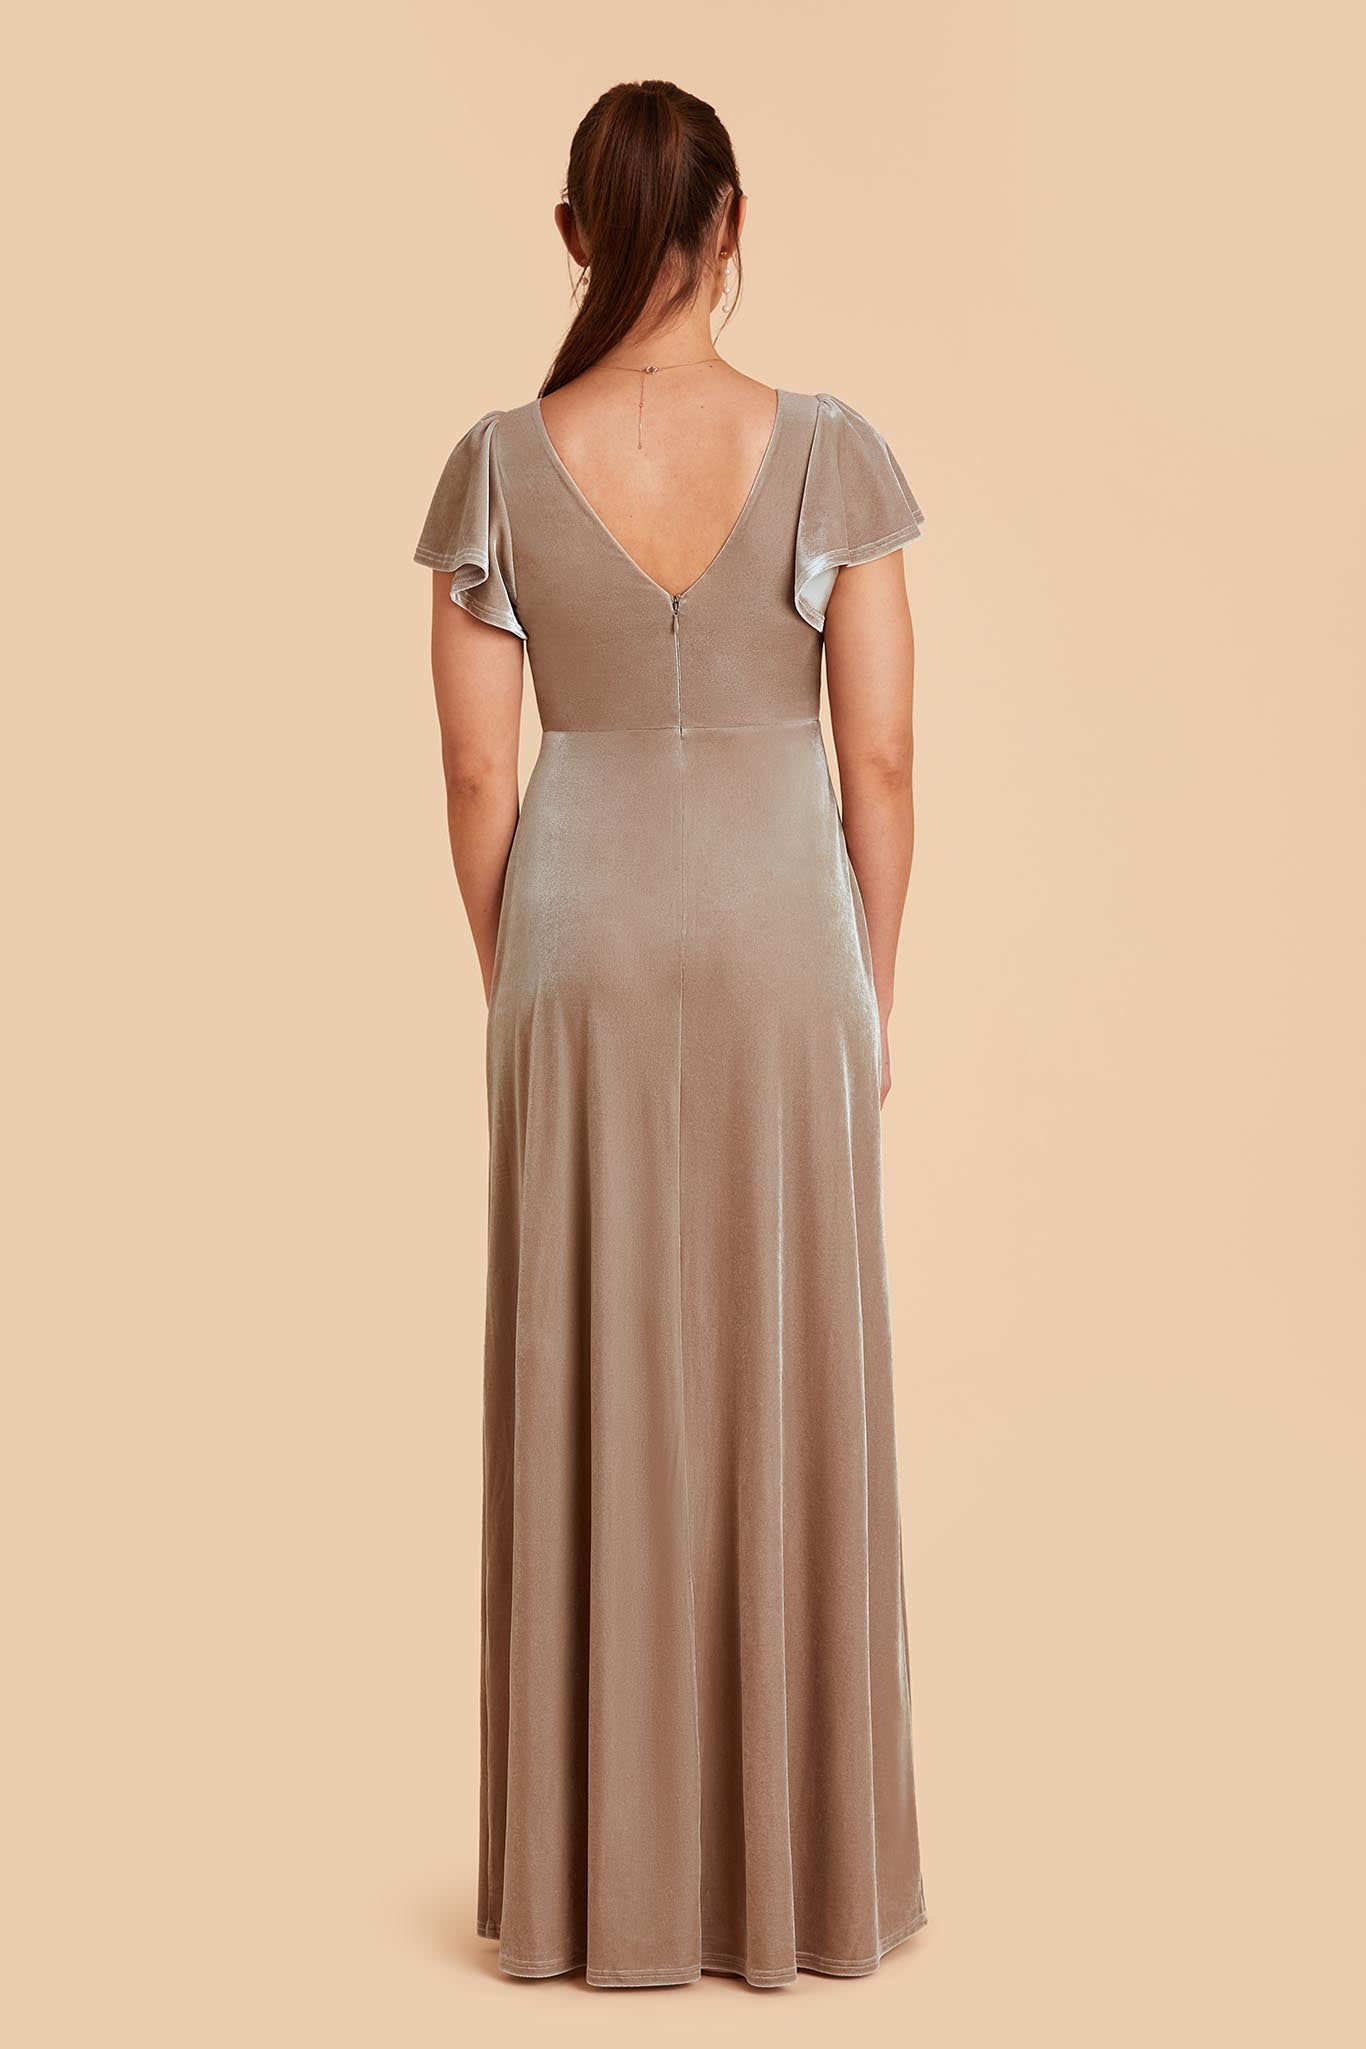 Taupe Hannah Velvet Dress by Birdy Grey